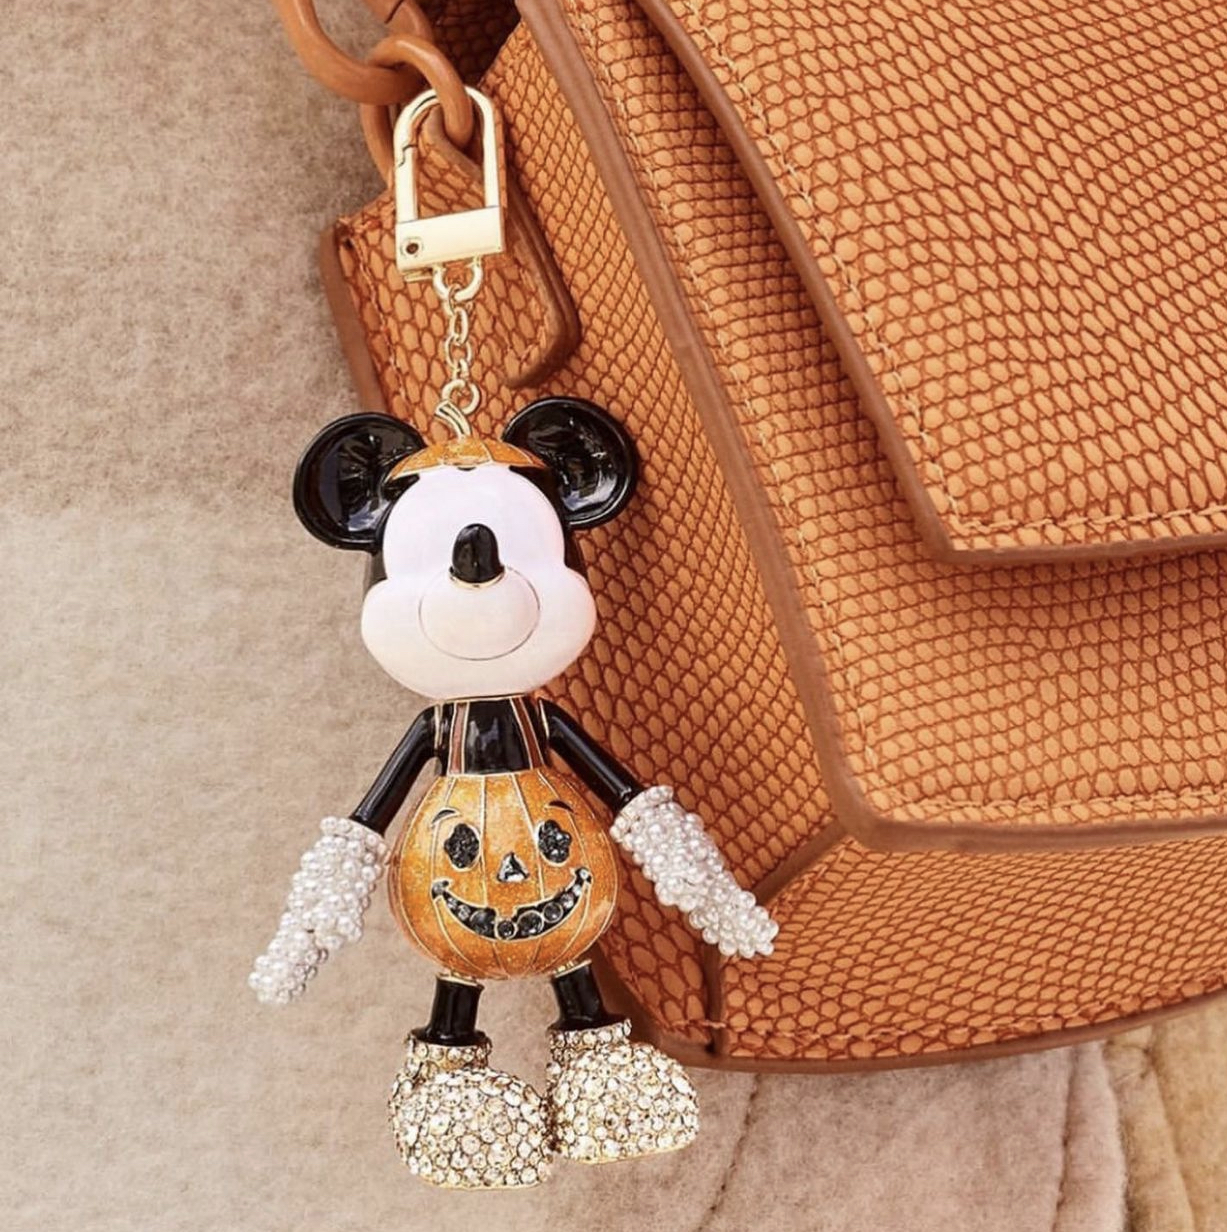 Mickey Mouse Disney Bag Charm - Mickey Mouse Classic Bag Charm